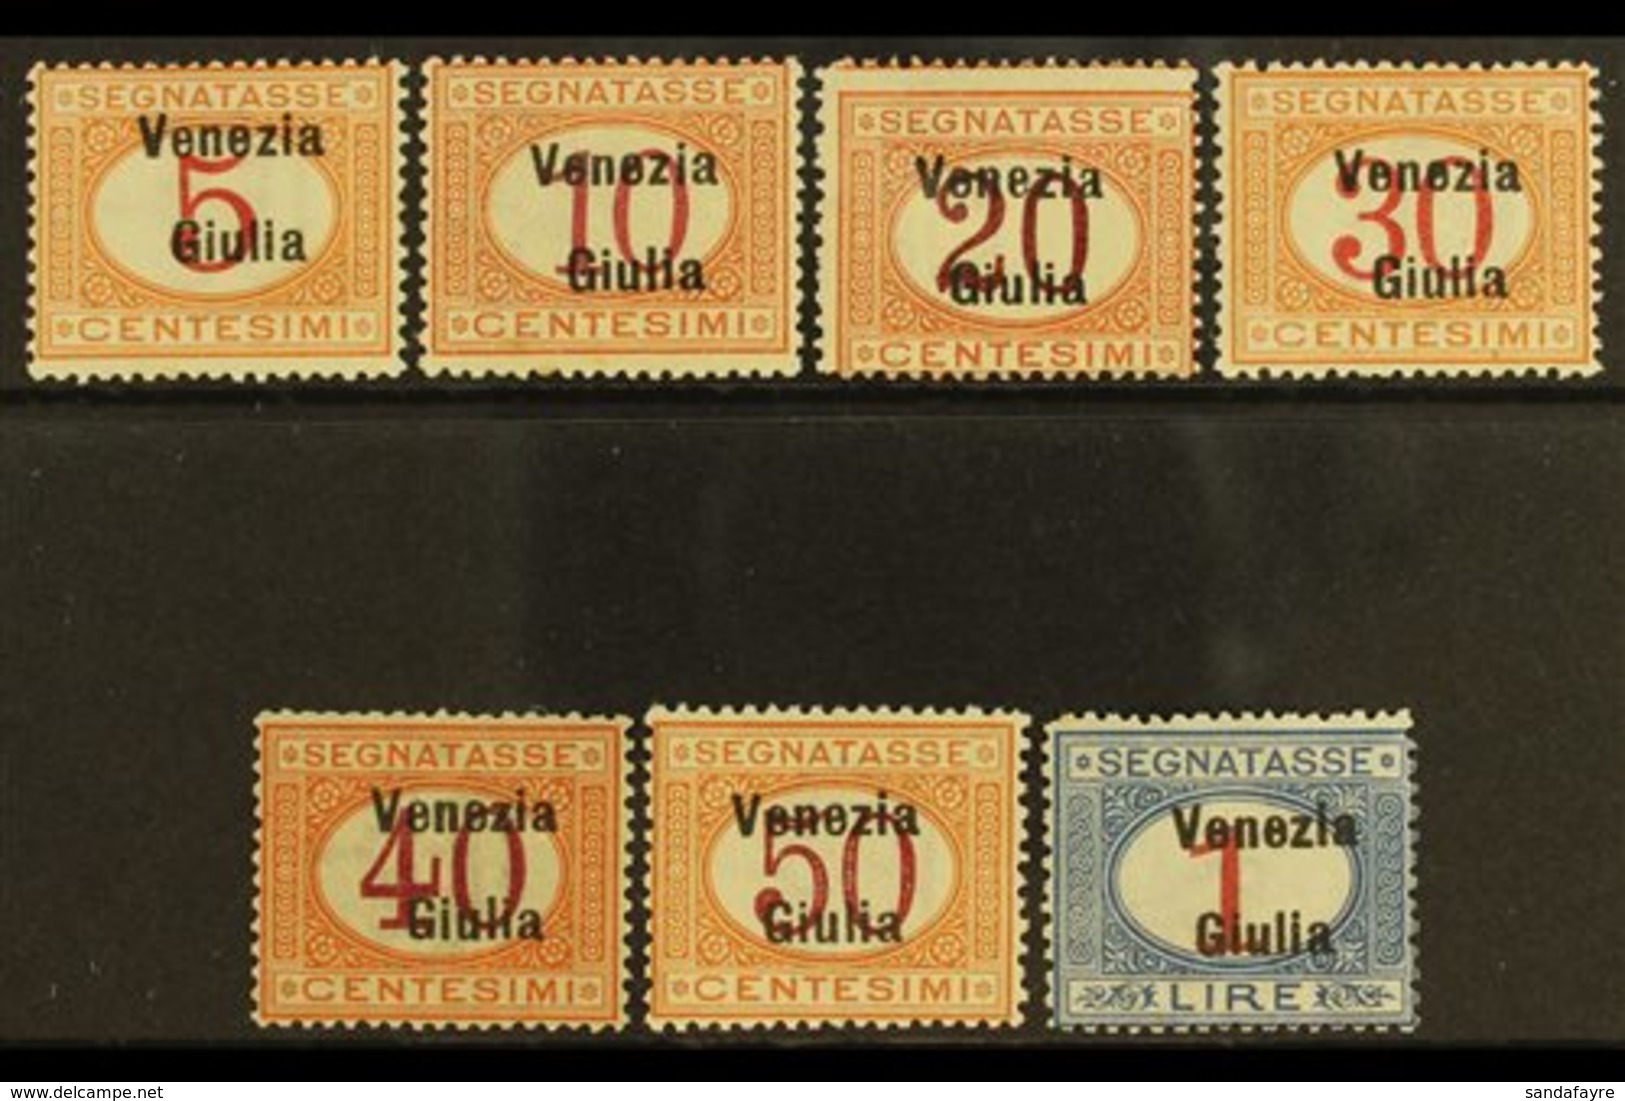 VENEZIA GIULIA POSTAGE DUES 1918 Overprint Set Complete, Sass S4, Very Fine Mint. Cat €1000 (£760) Rare Set. (7 Stamps)  - Unclassified